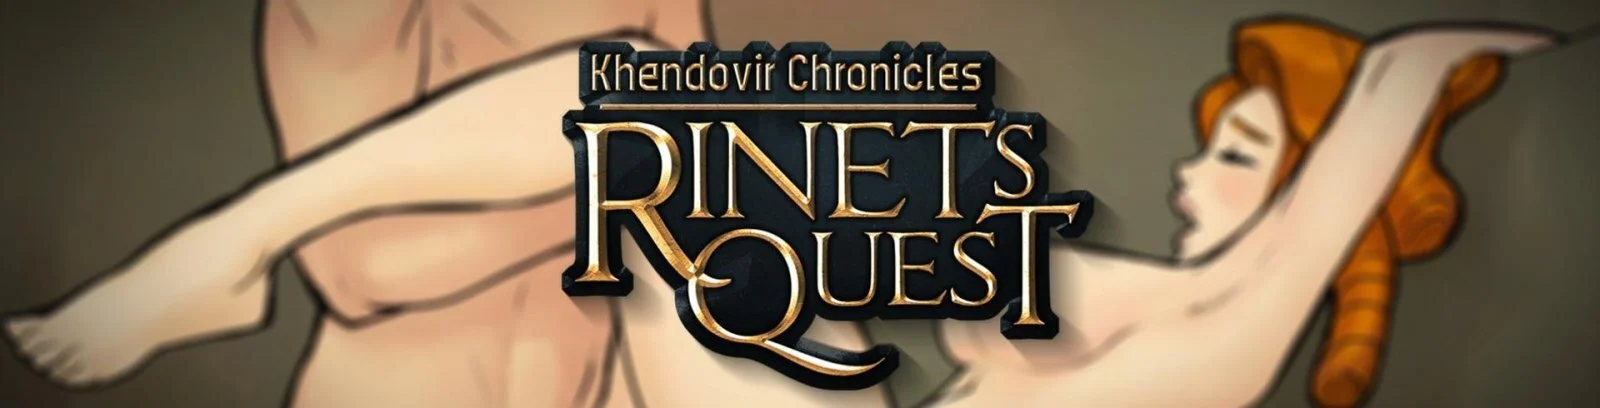 Khendovirs Chronicles Rinets Quest [v0.1402] main image